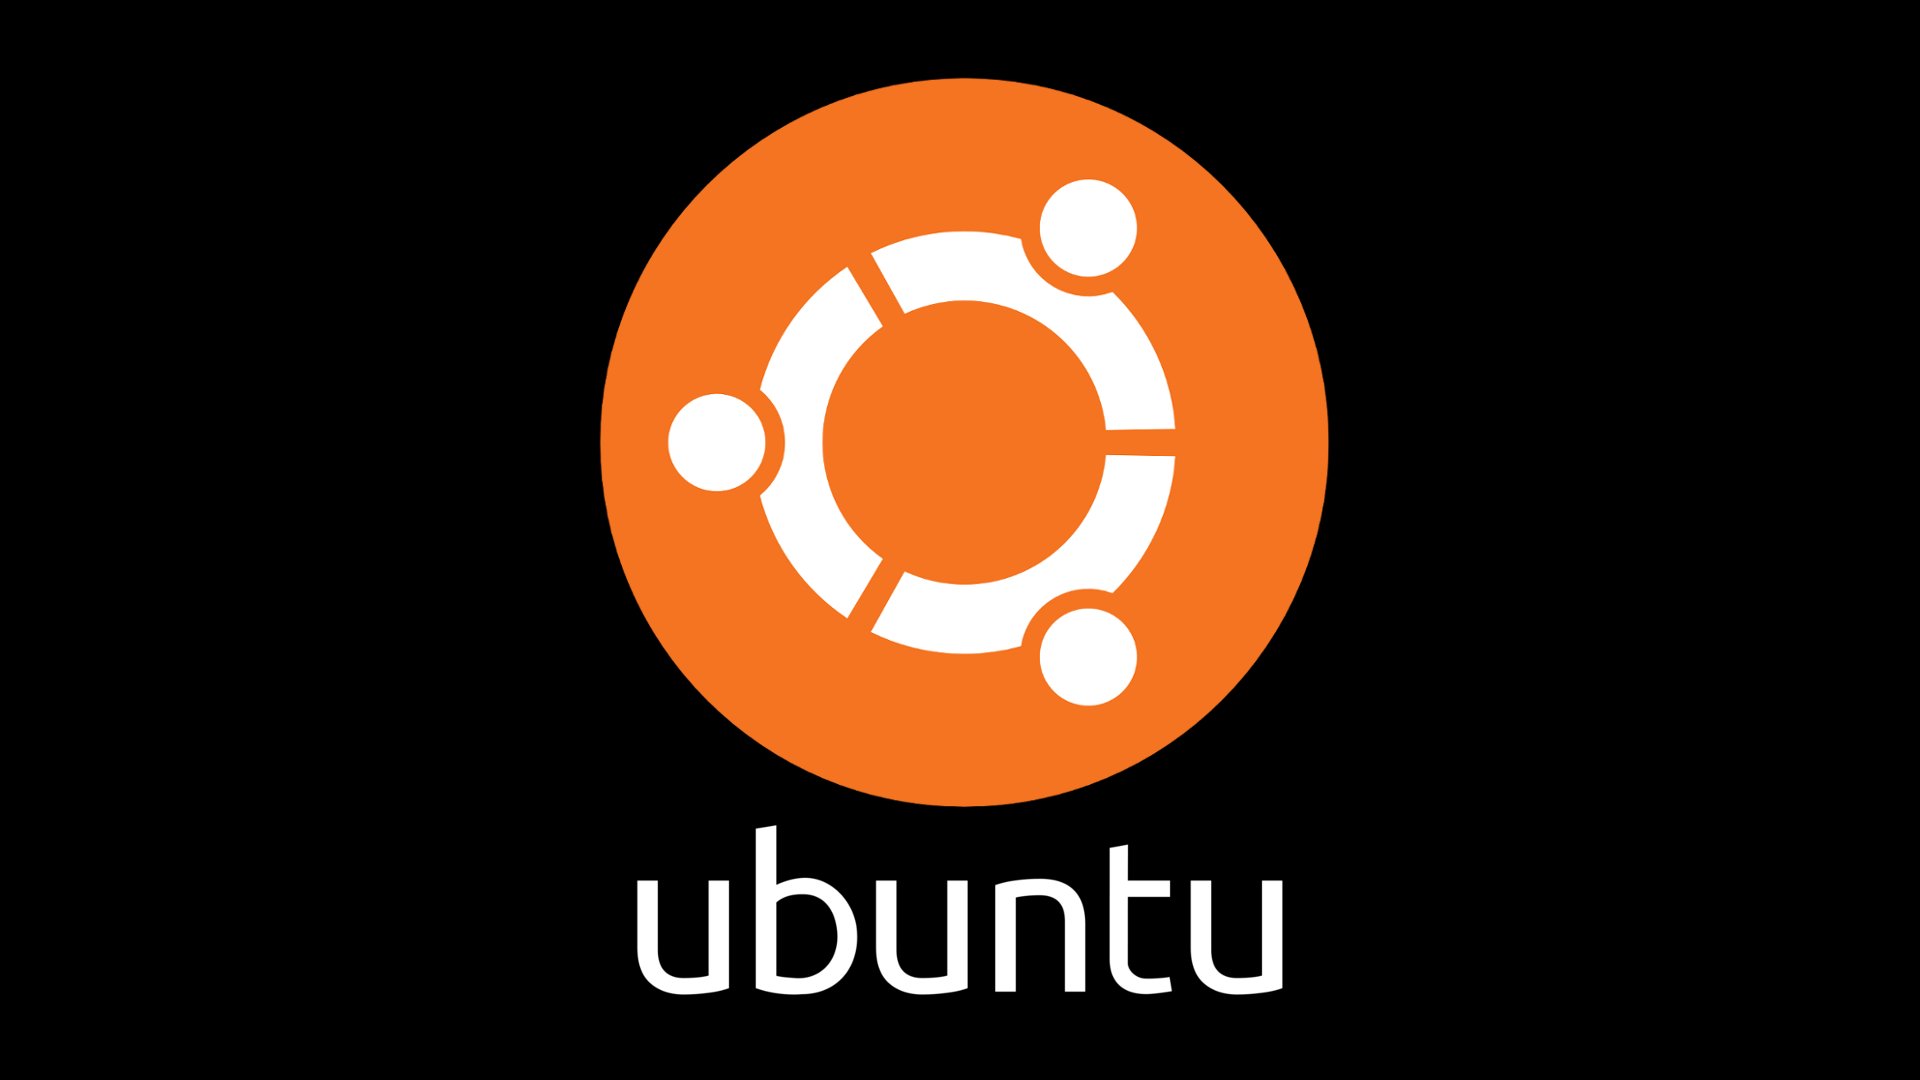 Linux ubuntu operating system free download full version iso